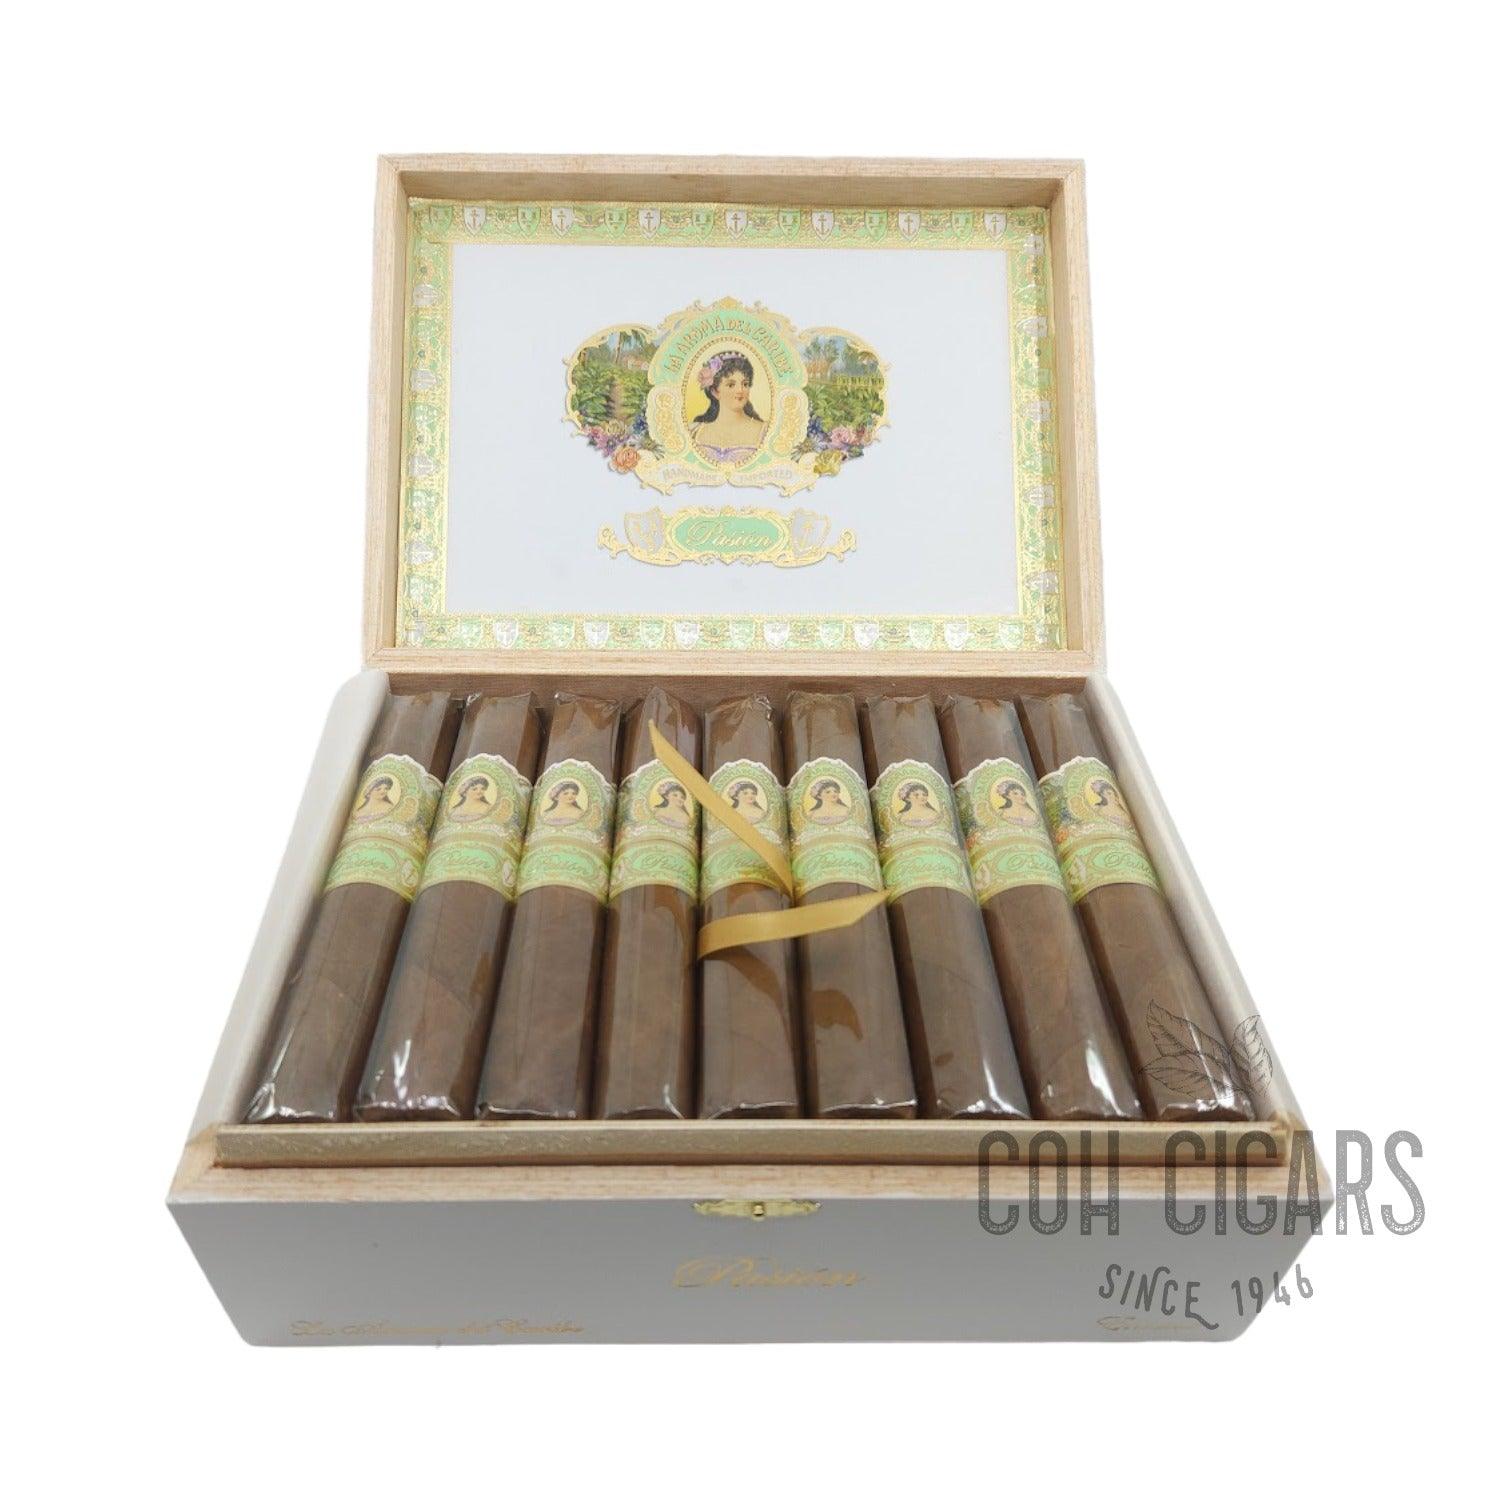 La Aroma del Caribe Cigar | Pasion Encanto | Box 25 - HK CohCigars